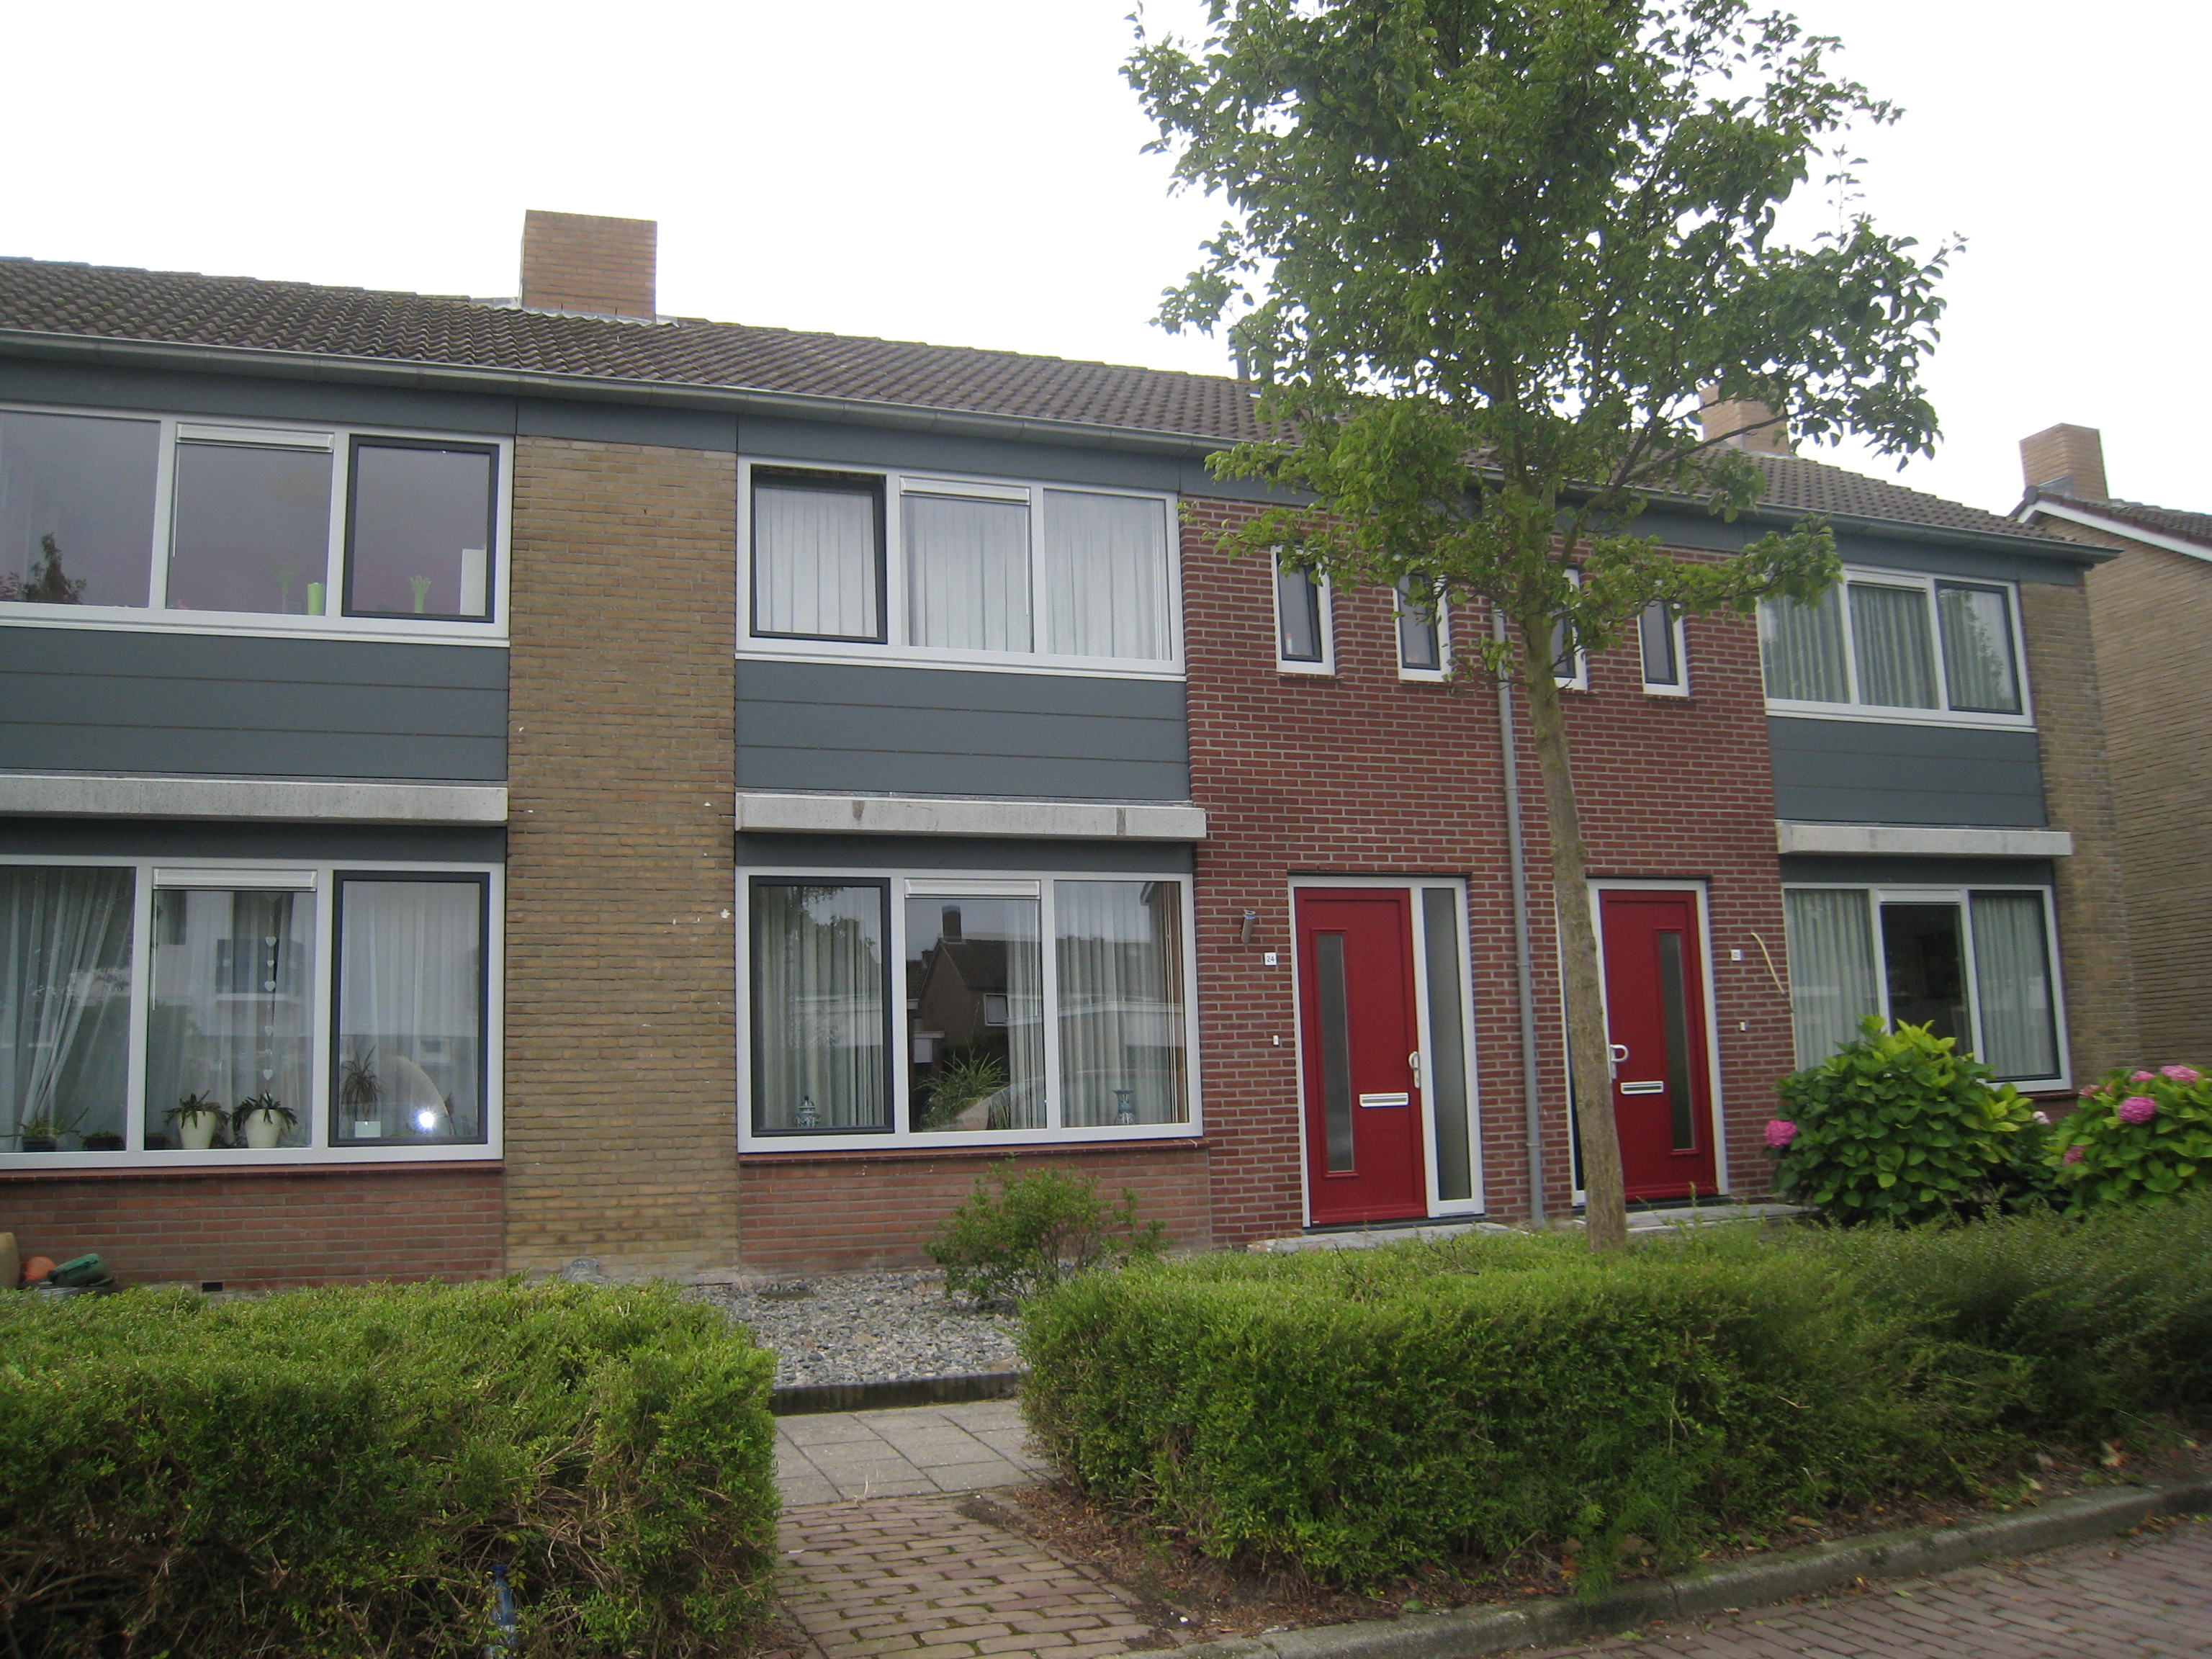 Prins Willem Alexanderstraat 24, 4441 AZ Ovezande, Nederland